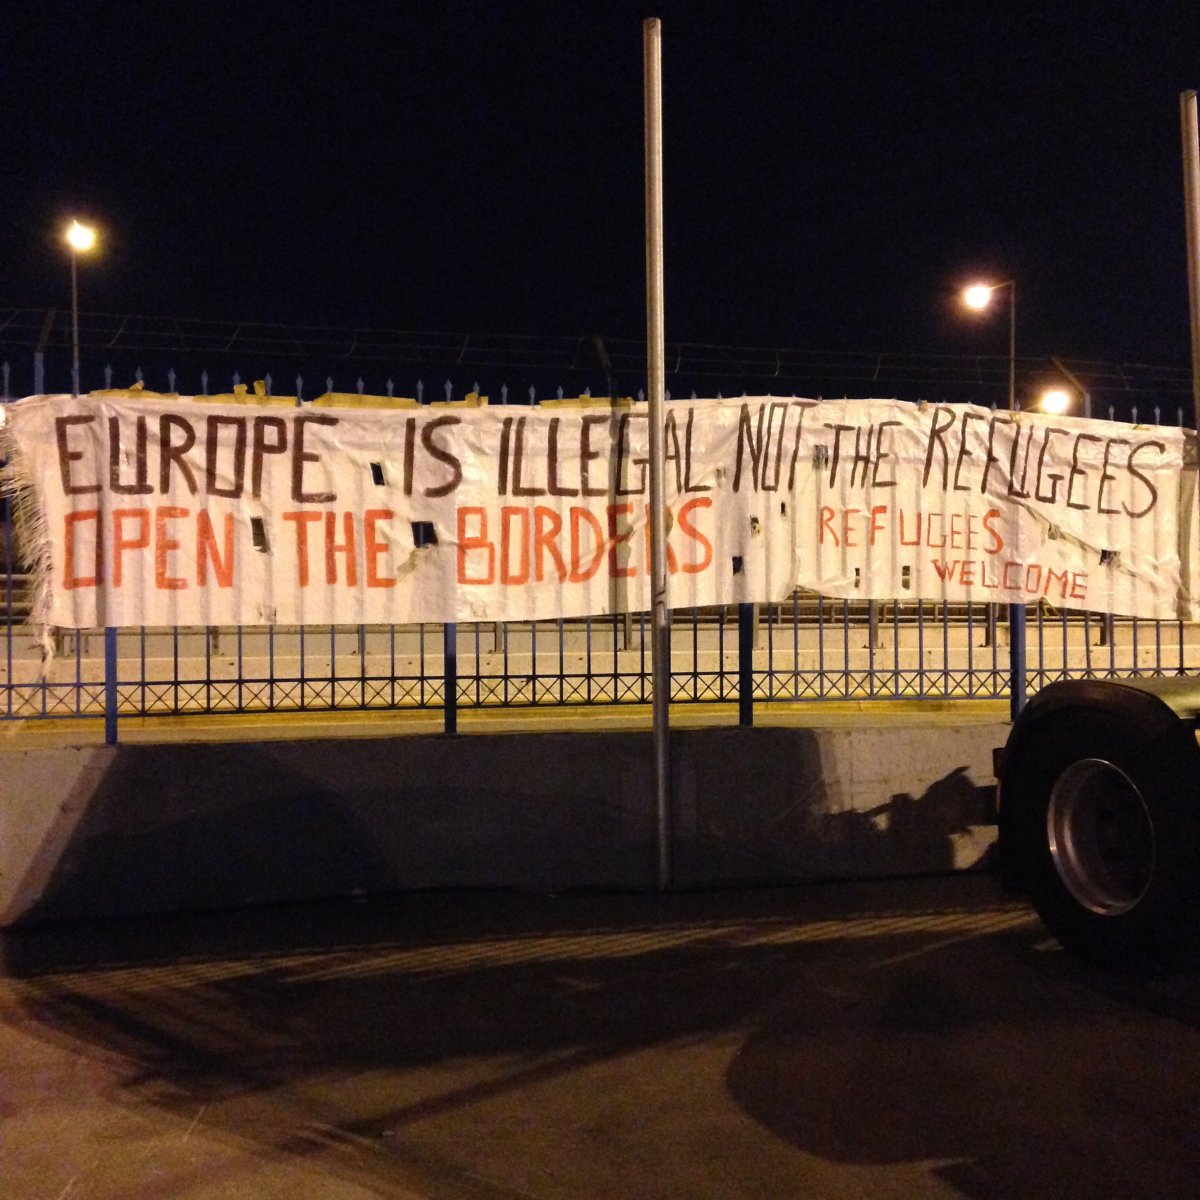 A pro-refugee banner from Piraeus.